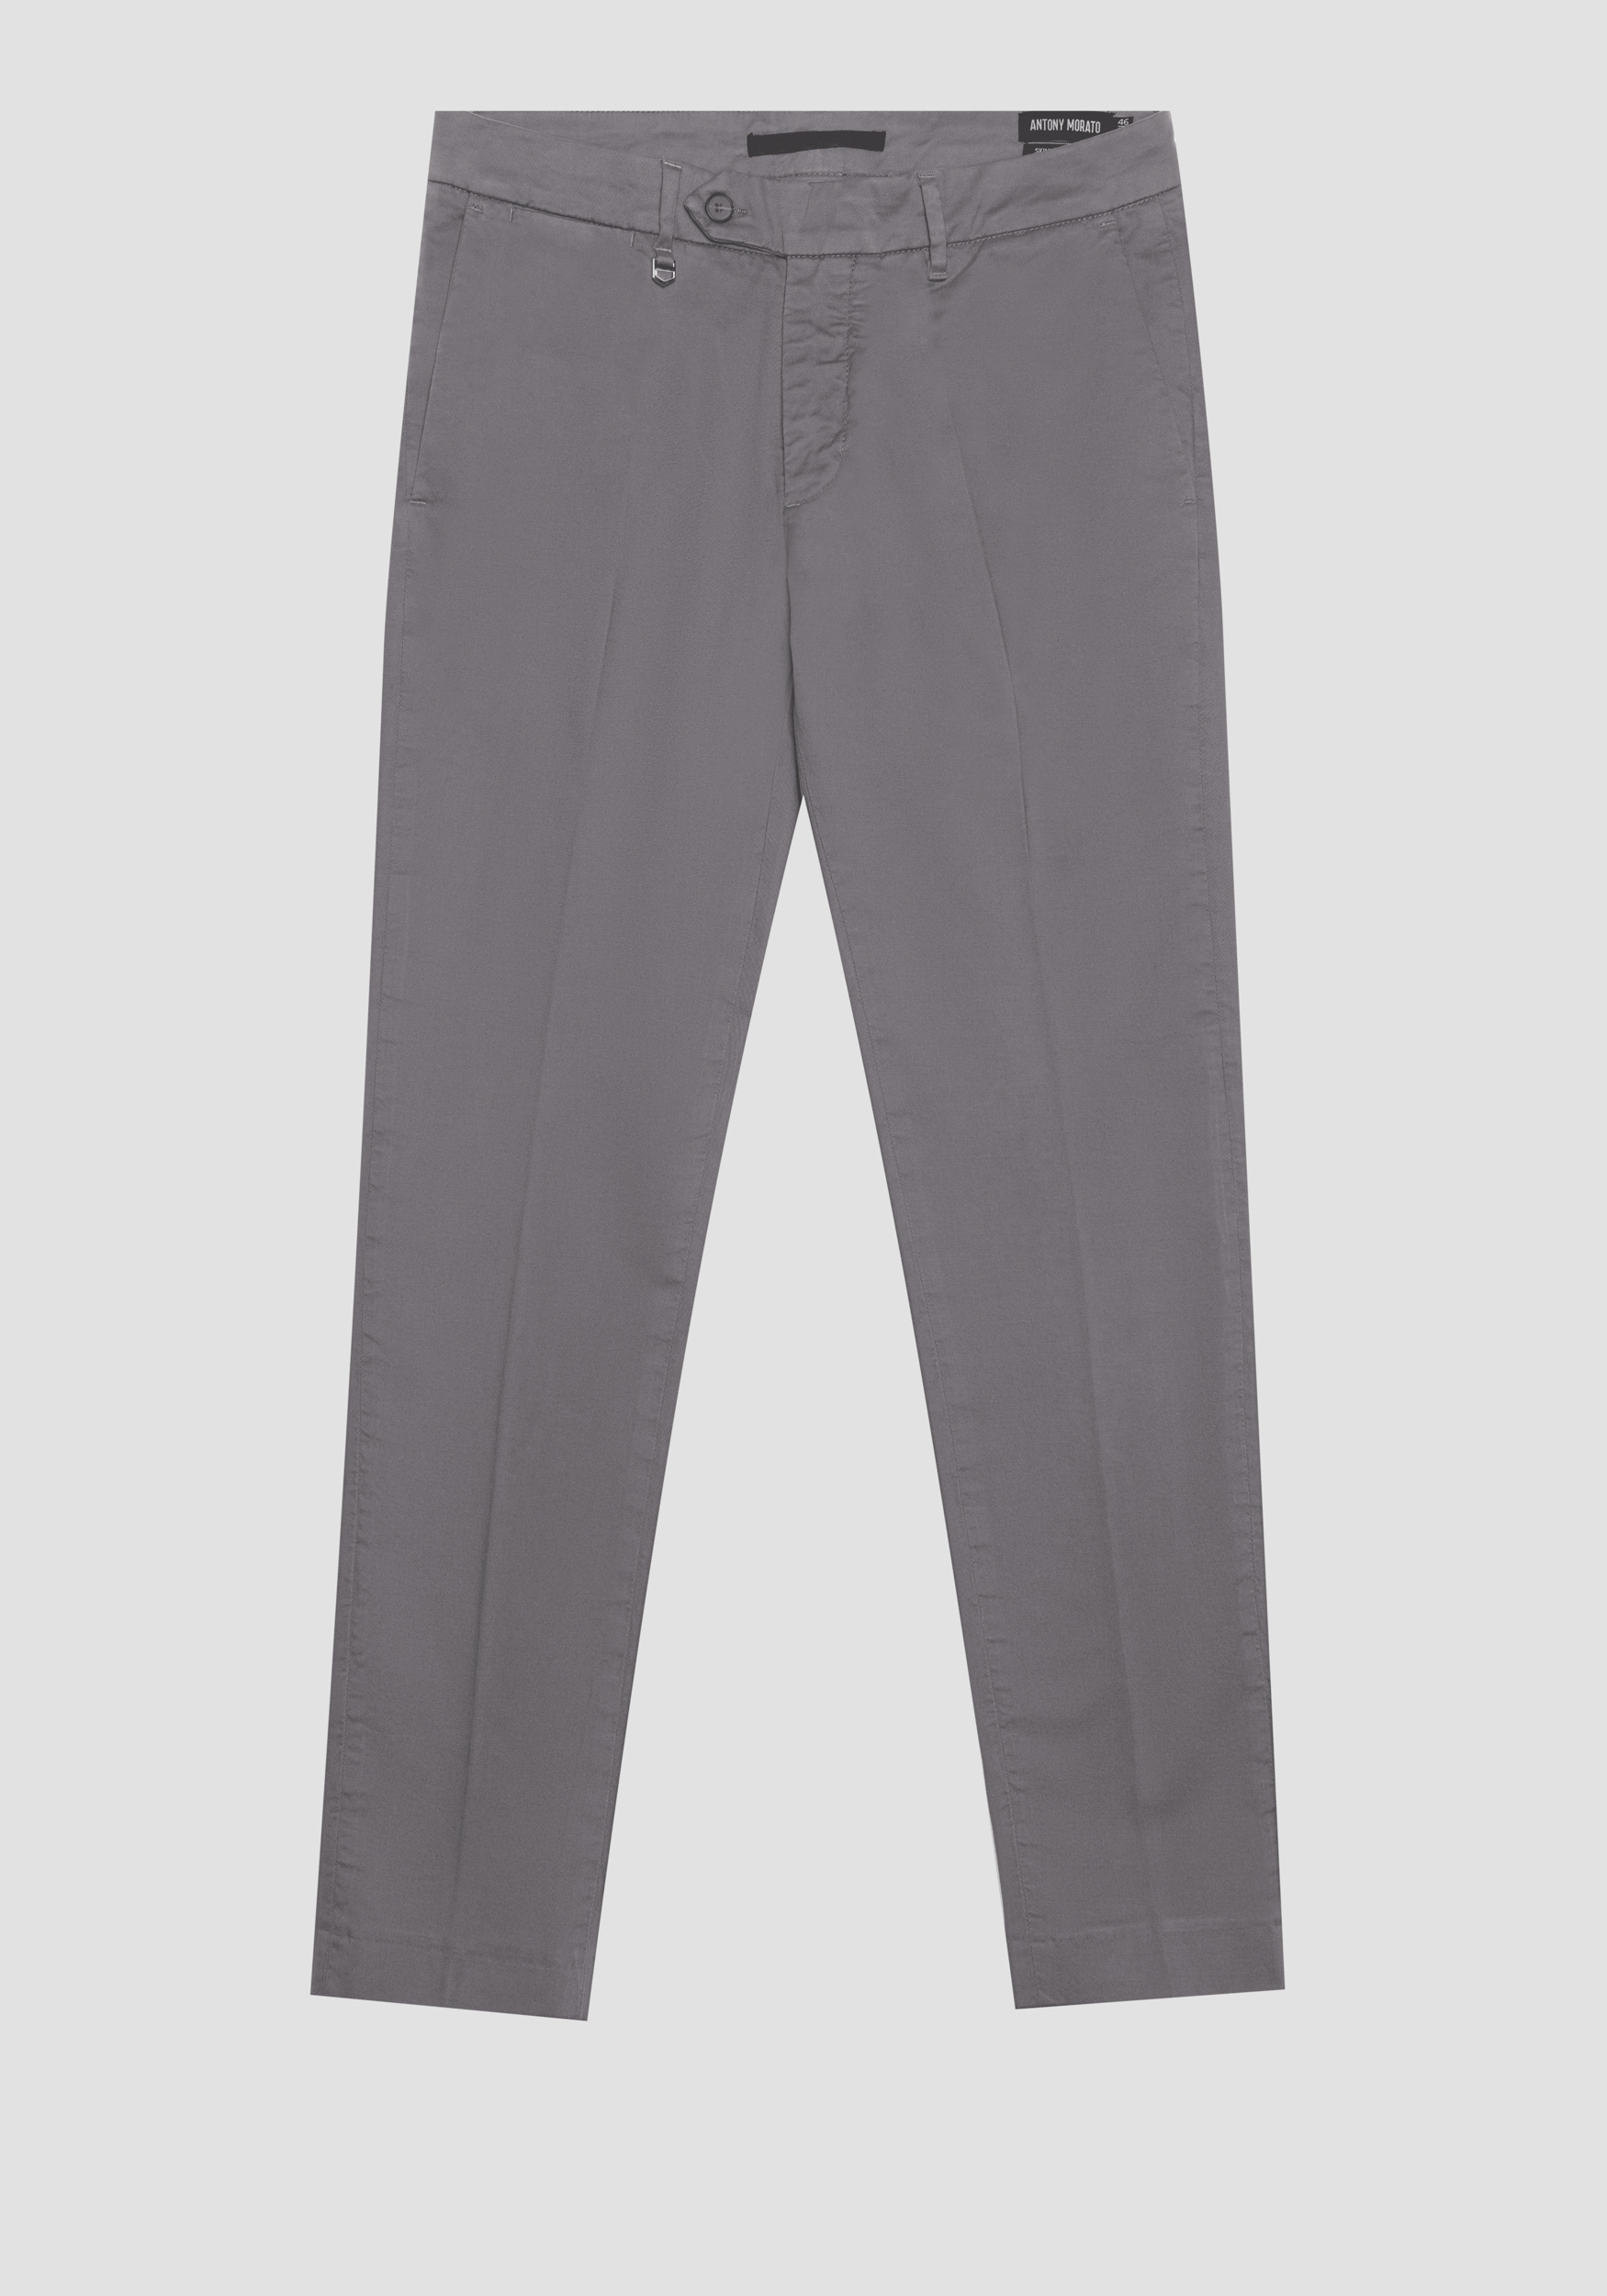 Antony Morato Pantalon Skinny Fit Bryan En Coton Doux Elastique Micro-Armure Anthracite | Homme Pantalons